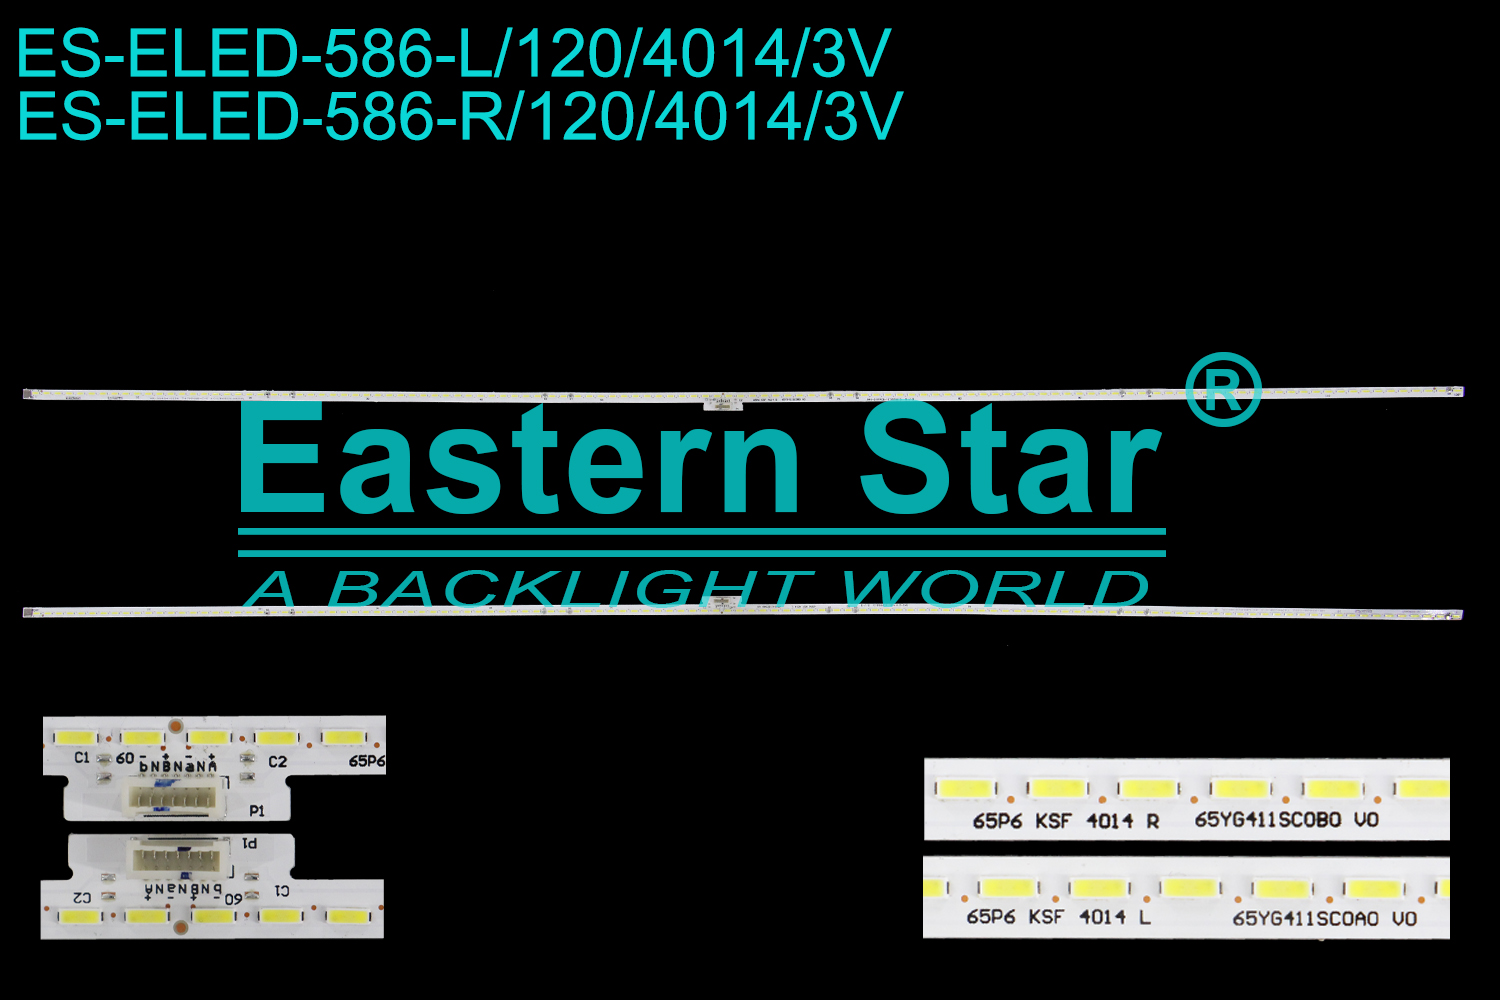 ES-ELED-586 ELED/EDGE TV backlight use for 65'' Tcl  65S517,65S513,65S515  L/R:HR-98404-0182 T47MNAB-C-K 4C-LB65C0-HR03L 94V-0 YFPCB-1 E355813 65P6 KSF 4014 L/R 65YG411SC0A0 V0 LED STRIPS(2)